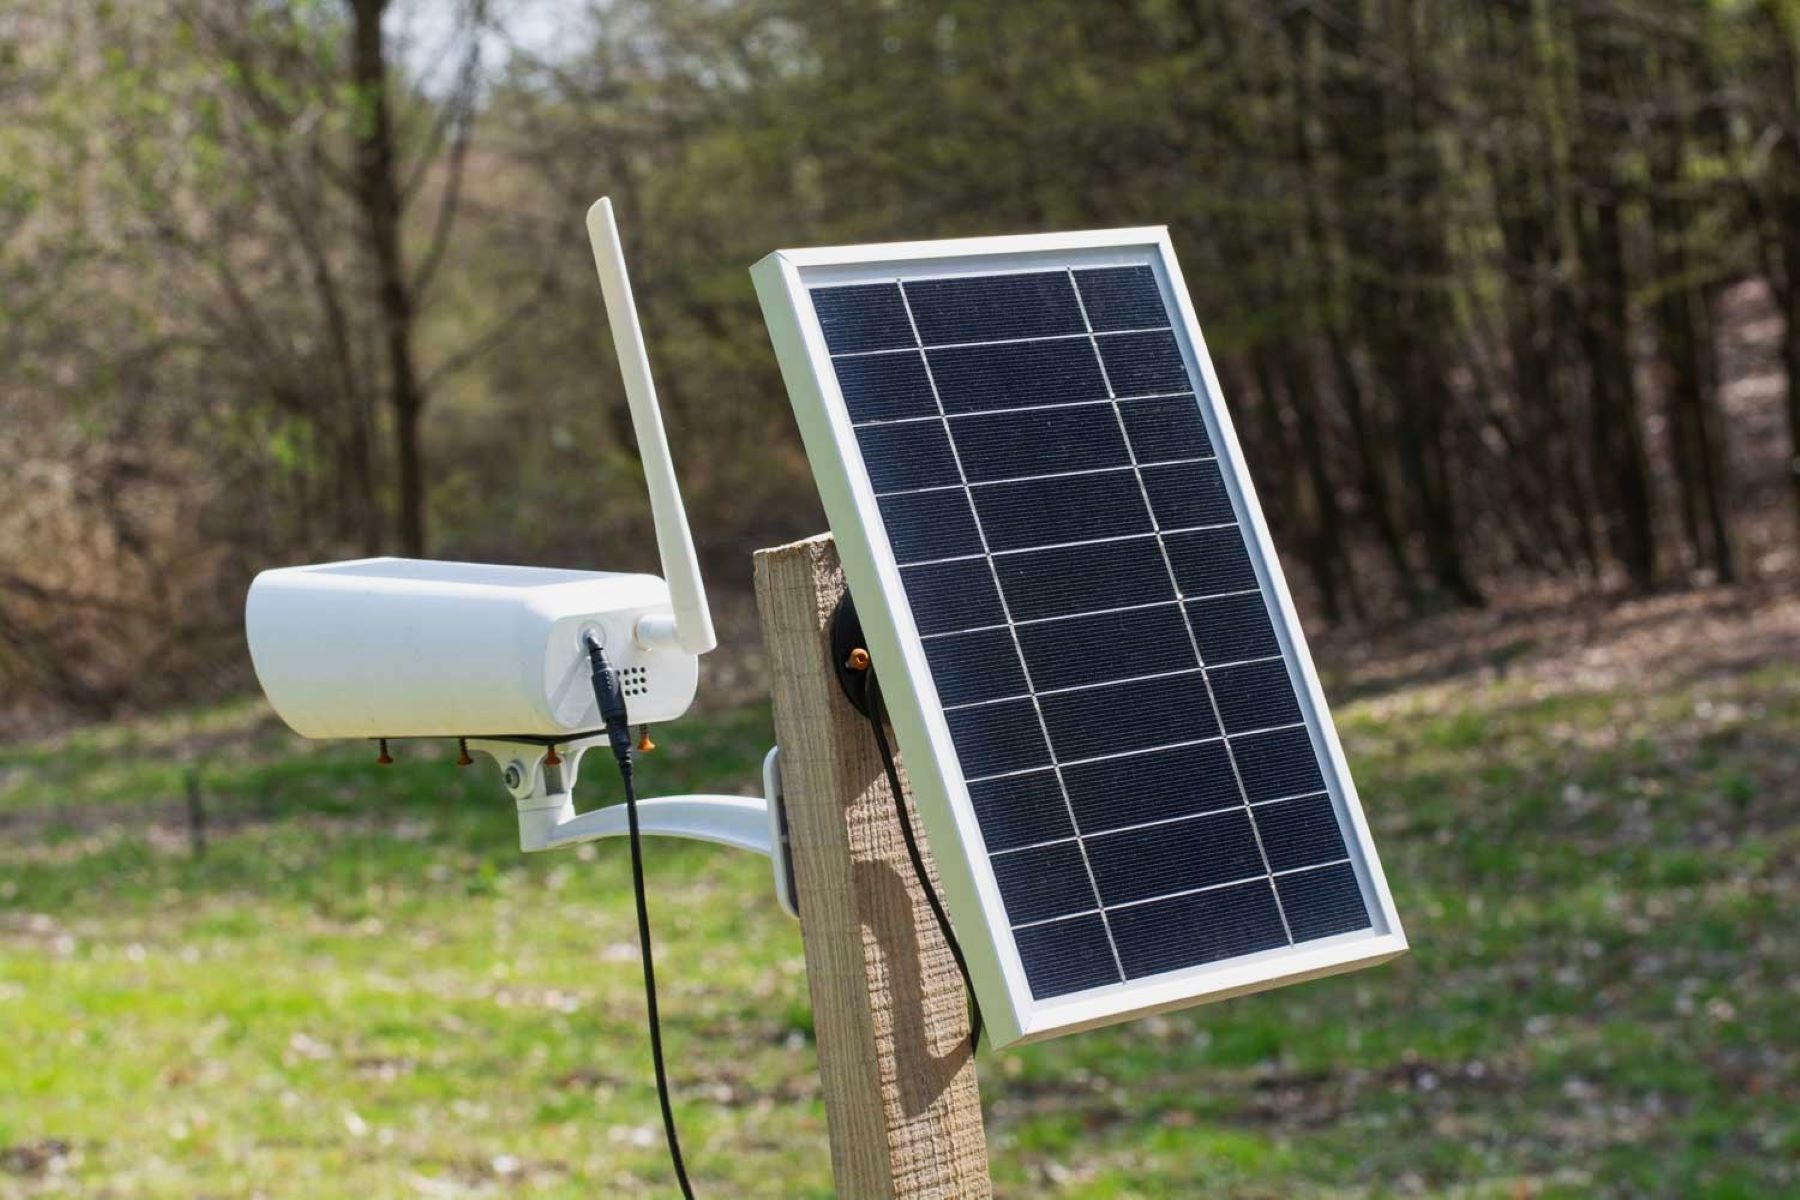 What Solar Panels Can Run An Outdoor Camera